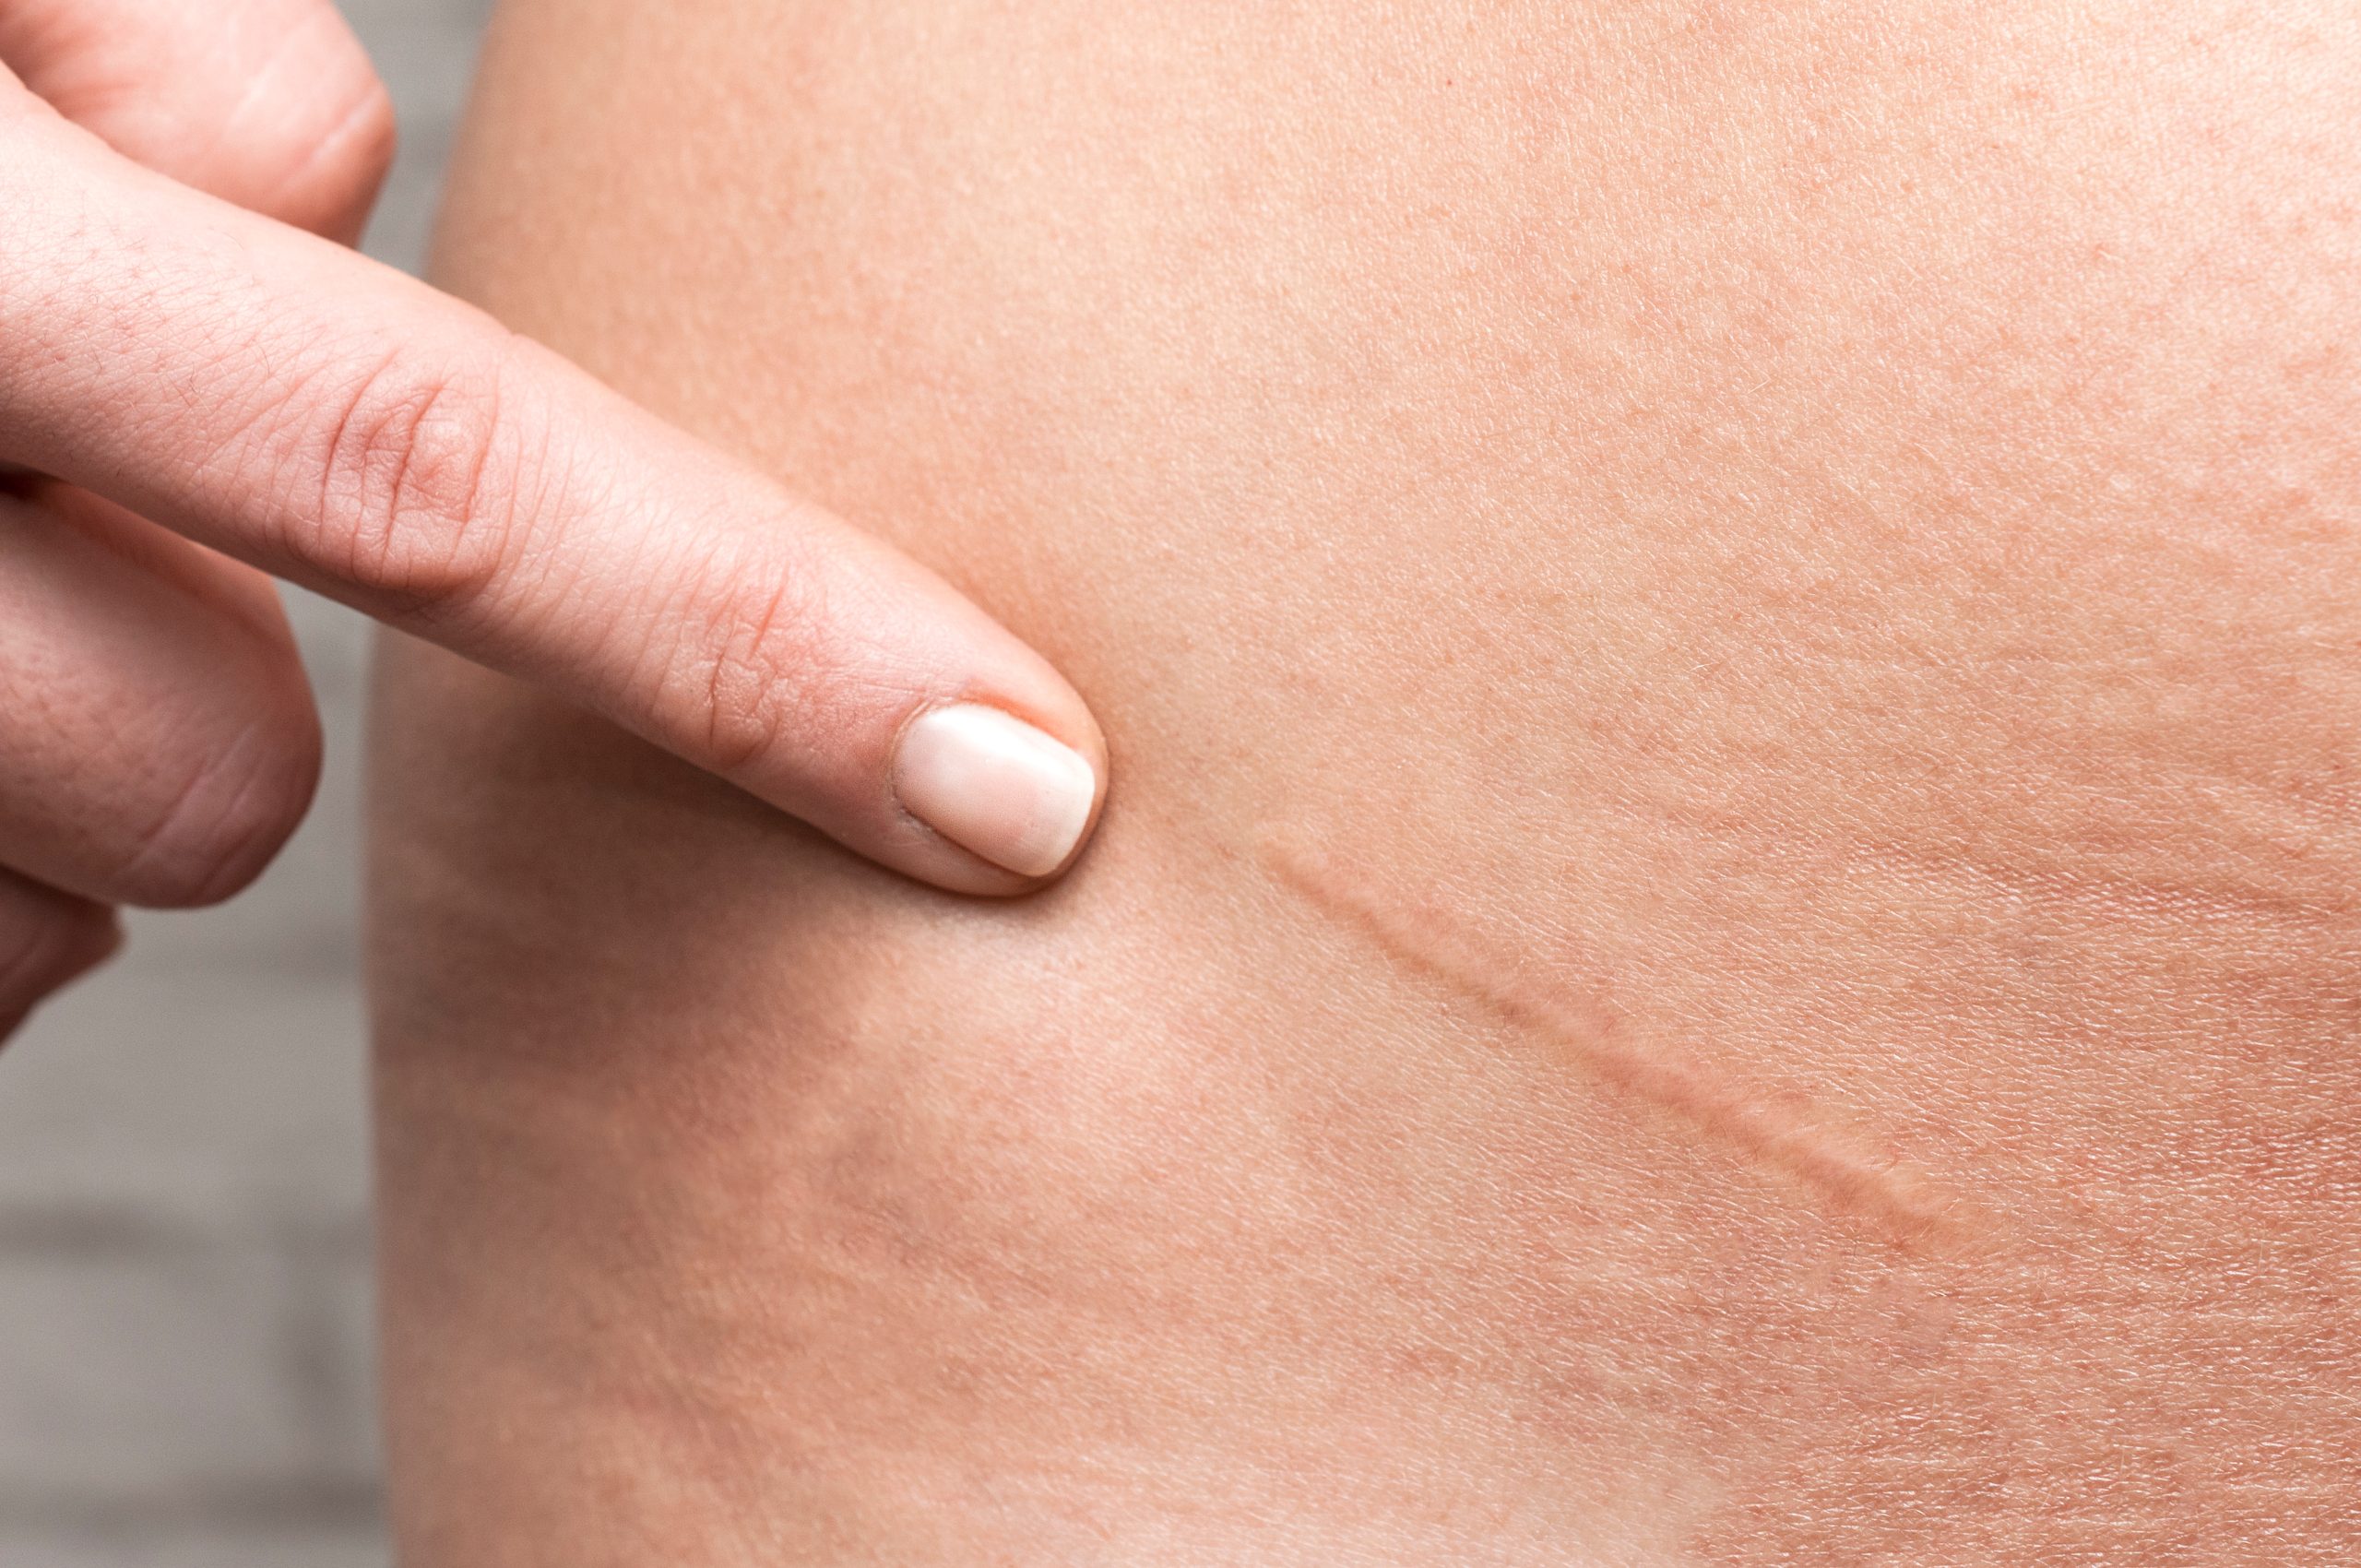 Appendicitis scar on woman's stomach